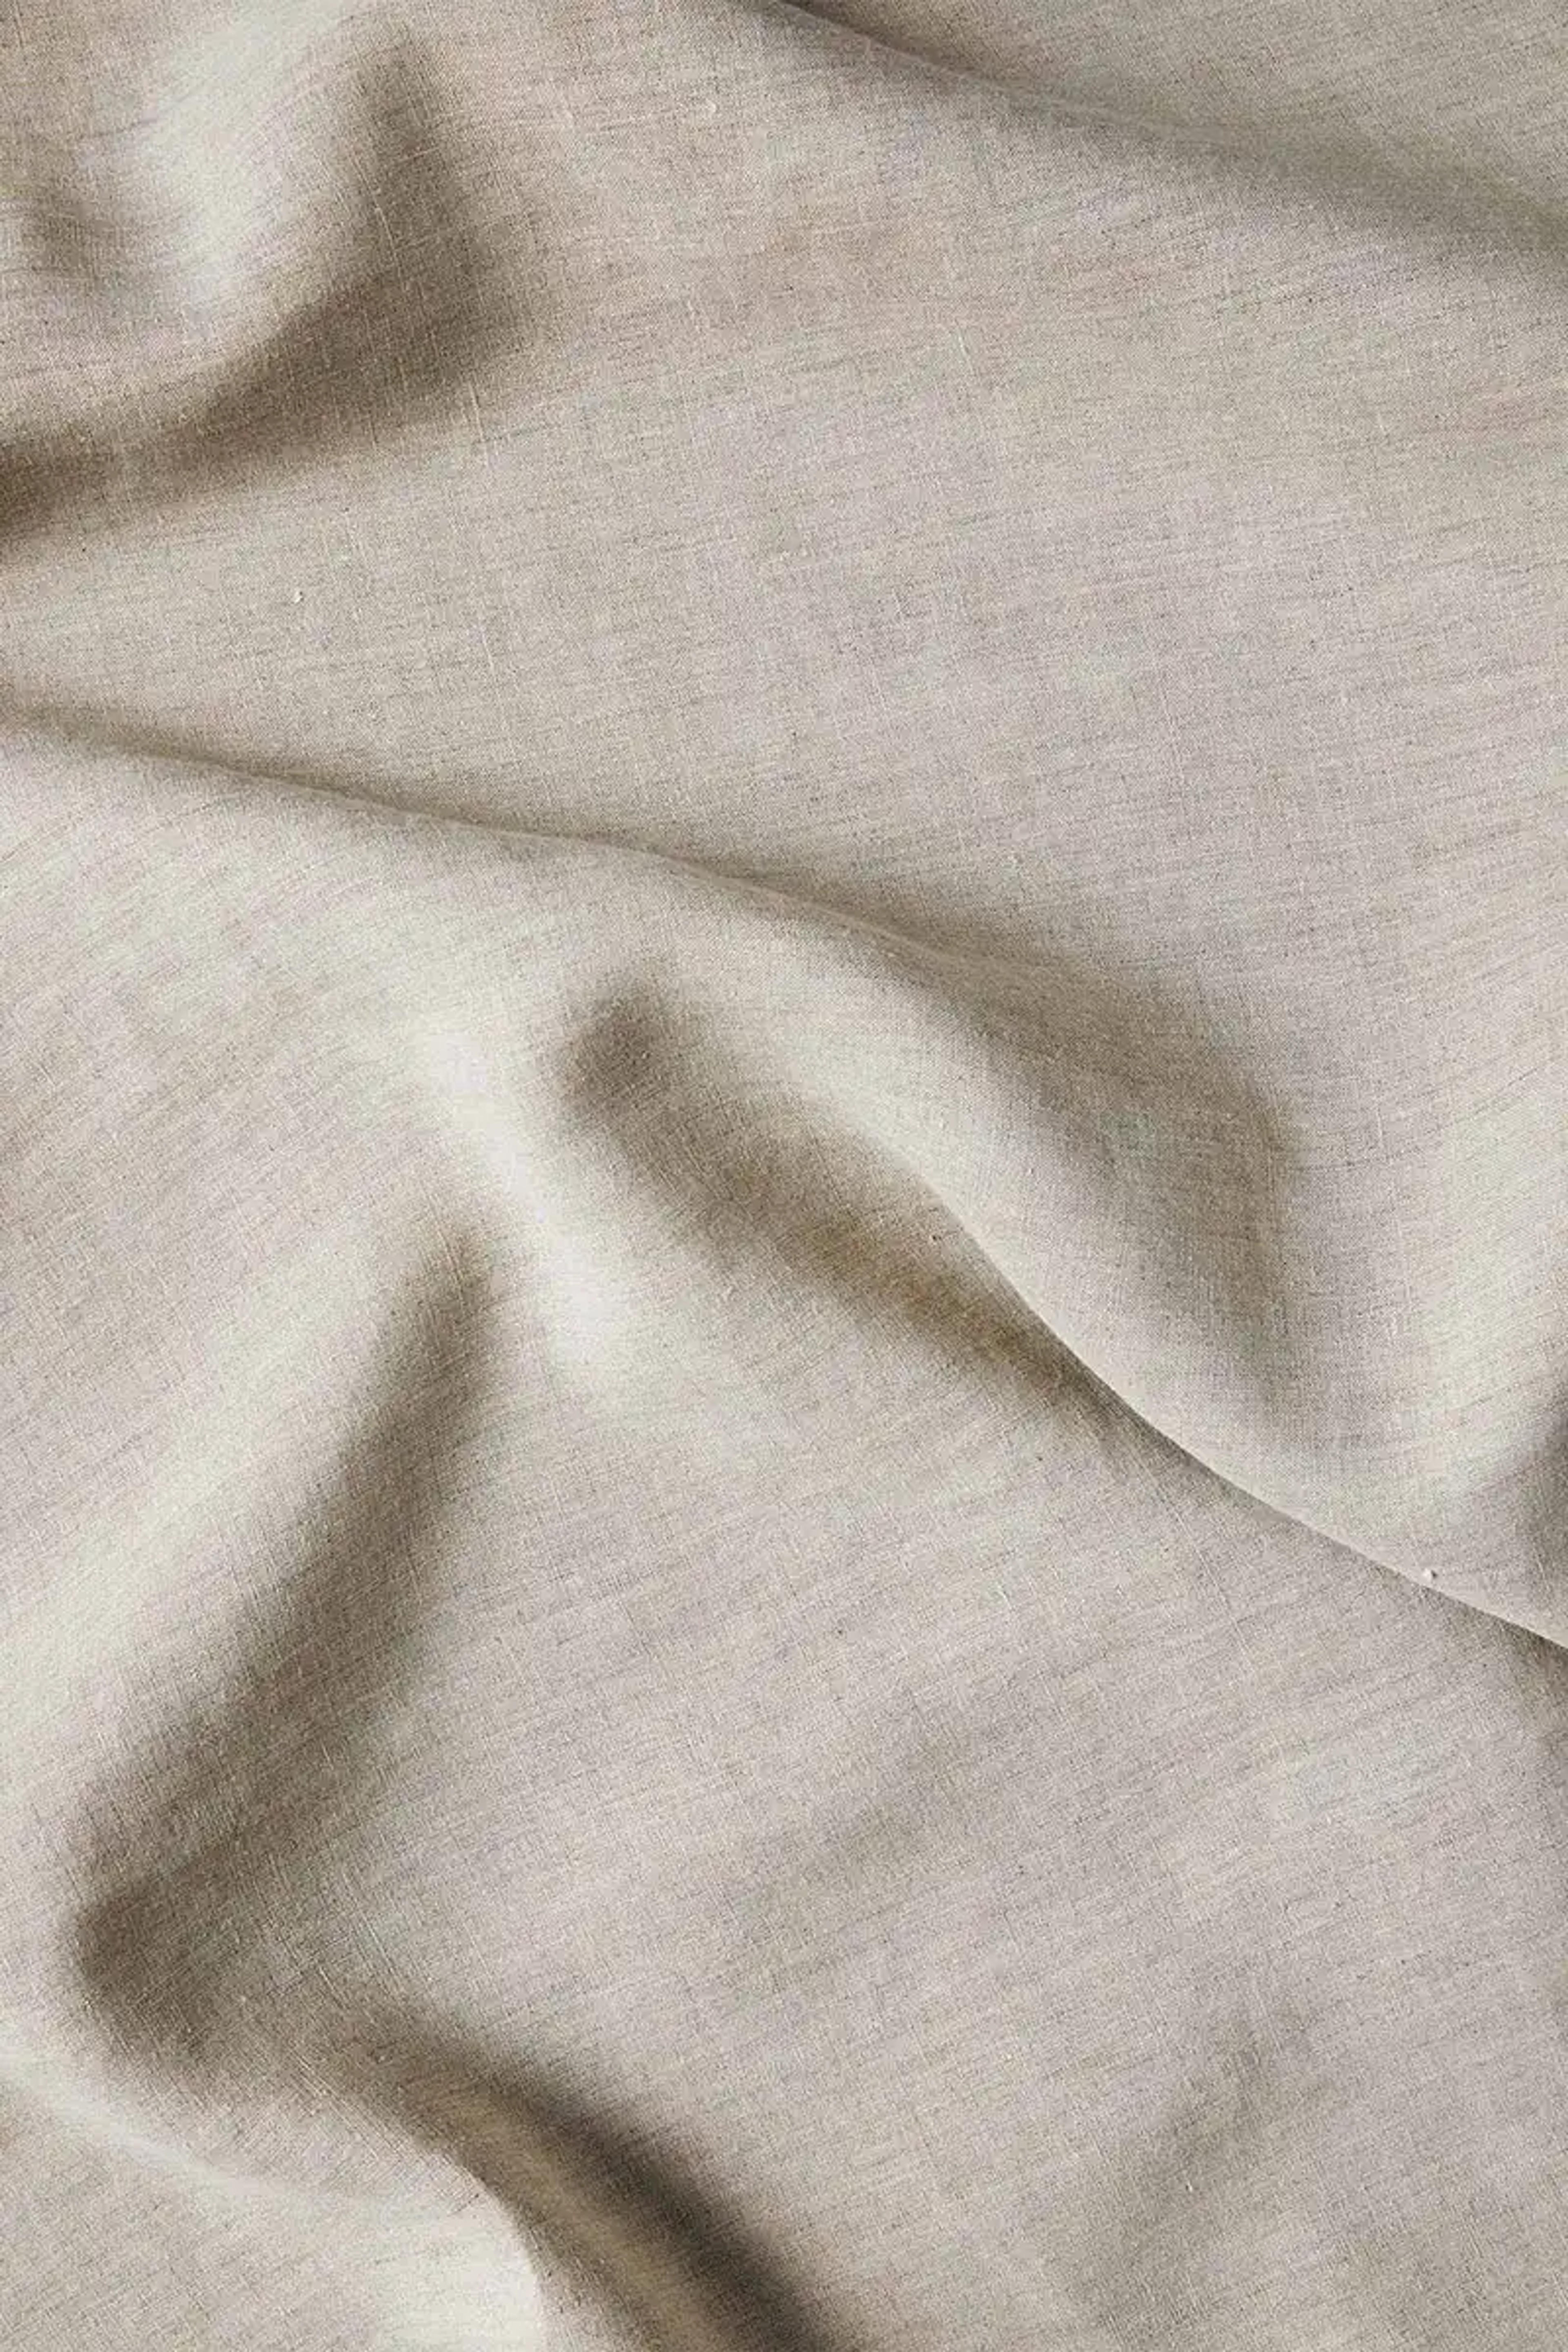 buffy.co/products/hemp-linen-pillowcase-set?color=Natural